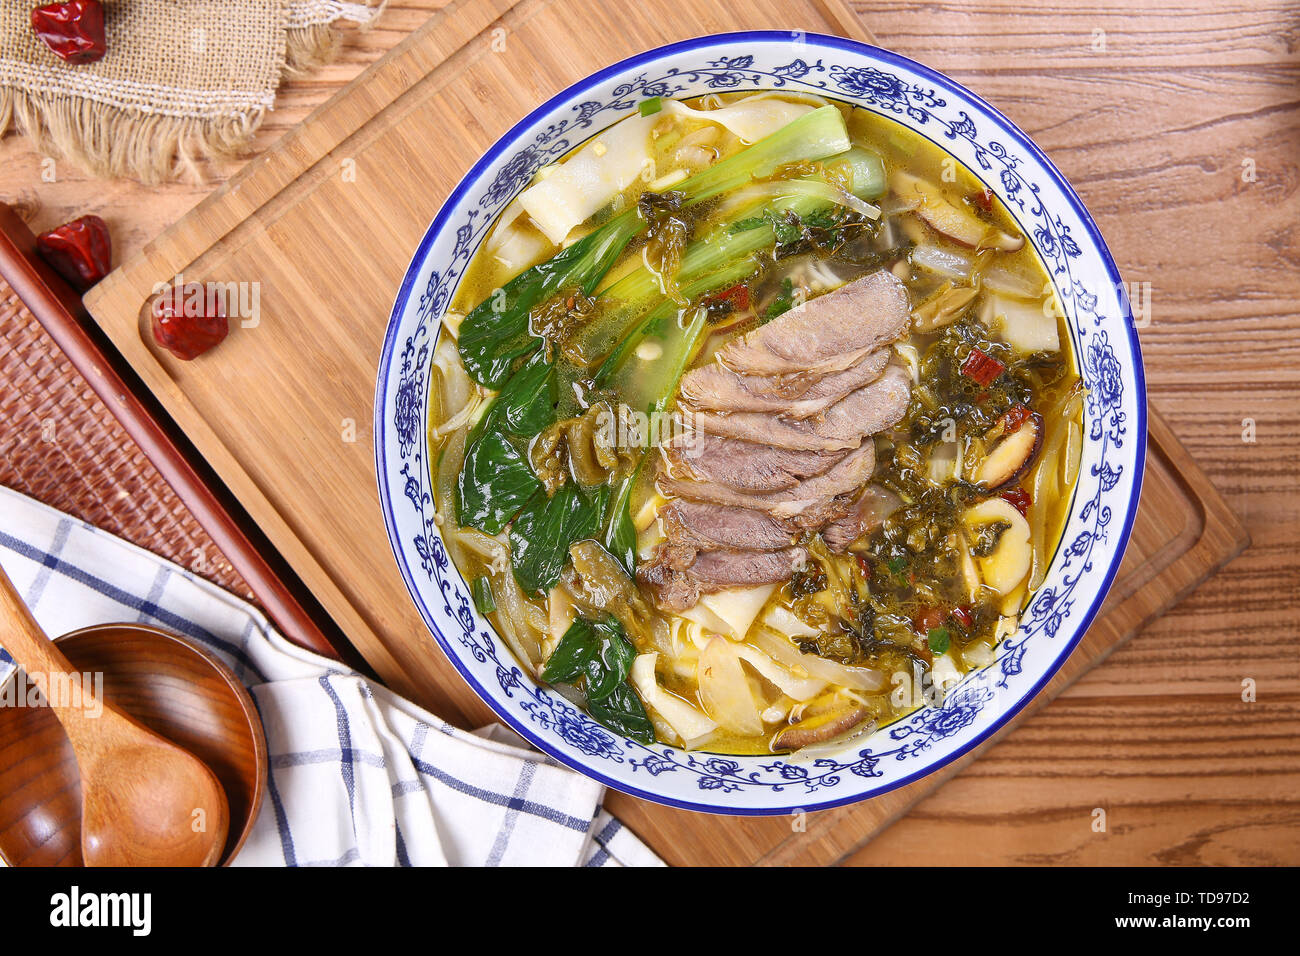 Sauerkraut beef noodles Stock Photo - Alamy